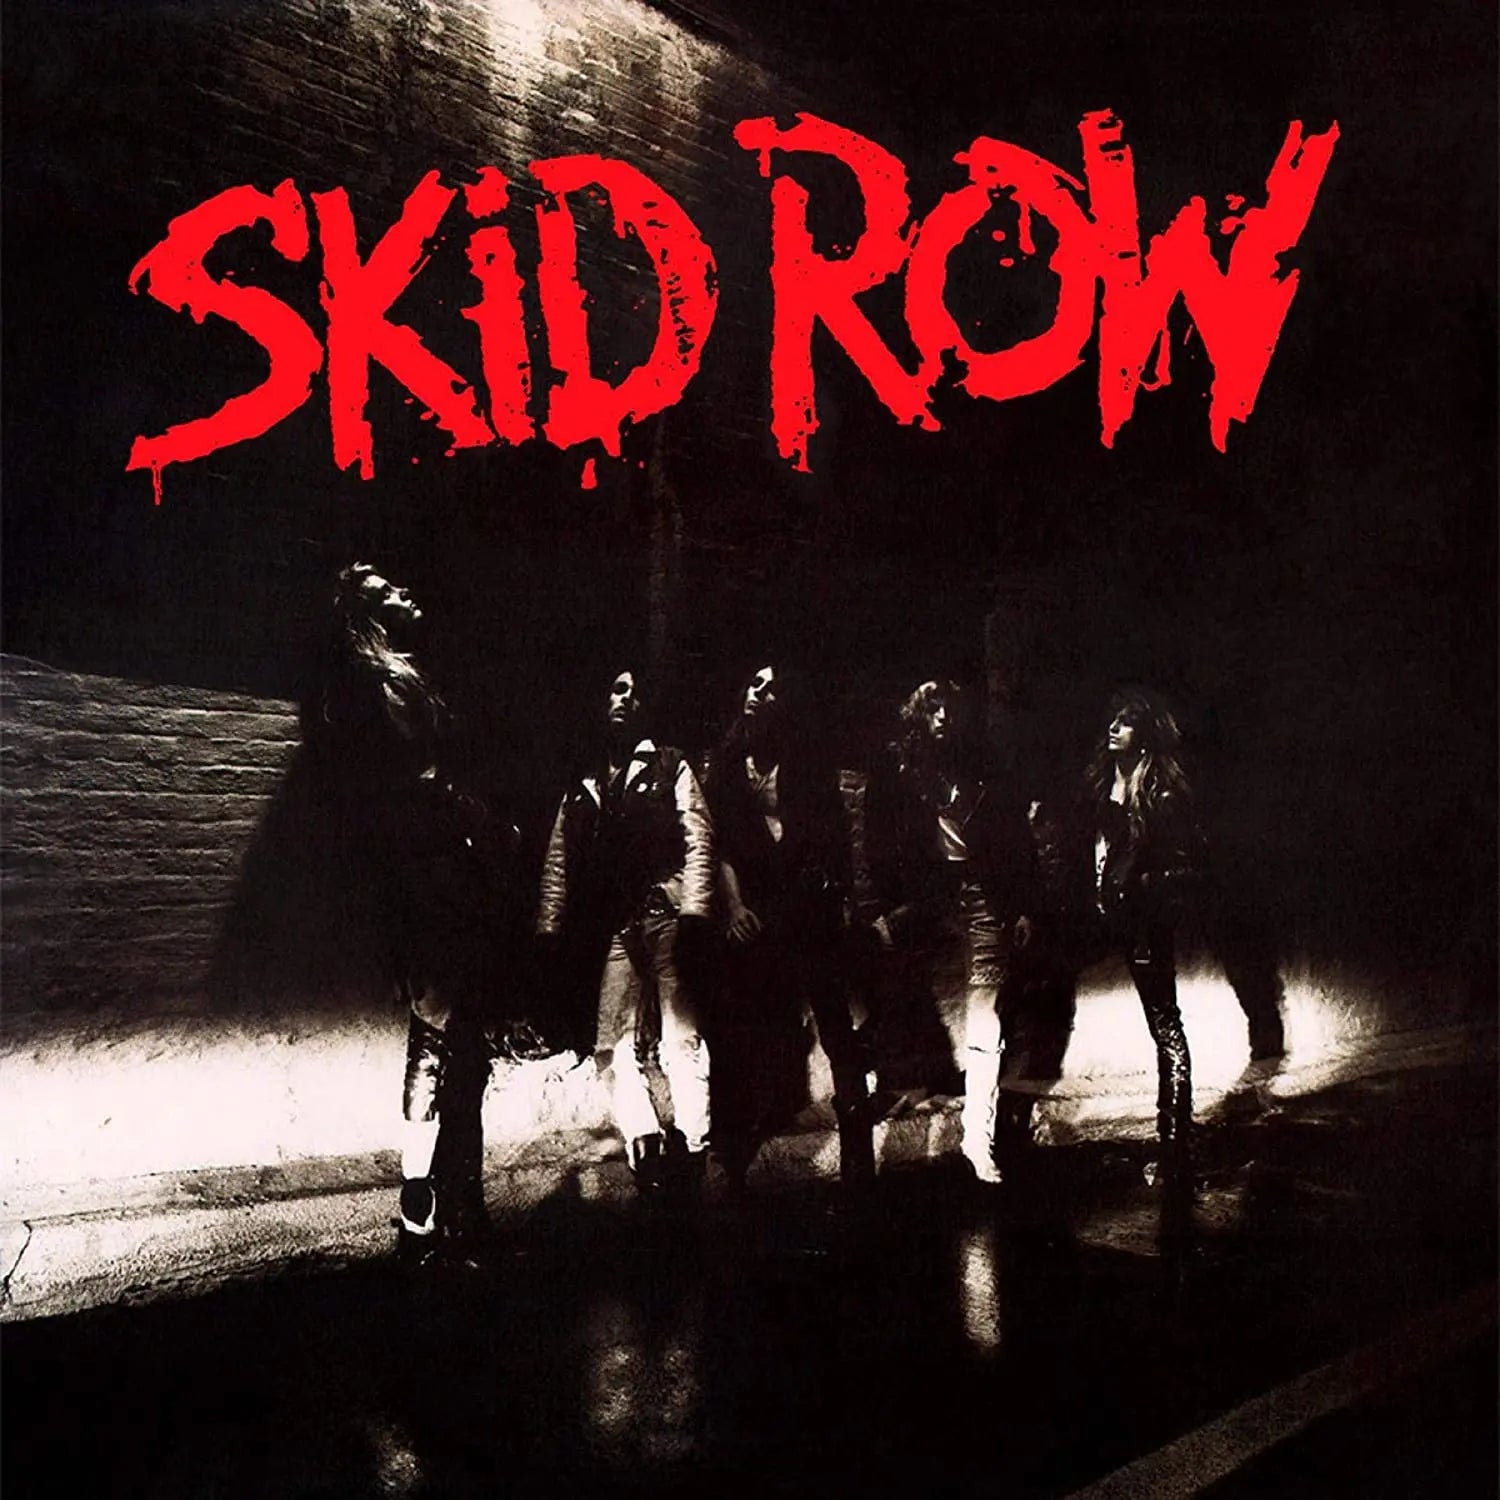 Skid Row - Skid Row (180 Gram Gold Metallic Audiophile Vinyl; Limited Anniversary Edition)